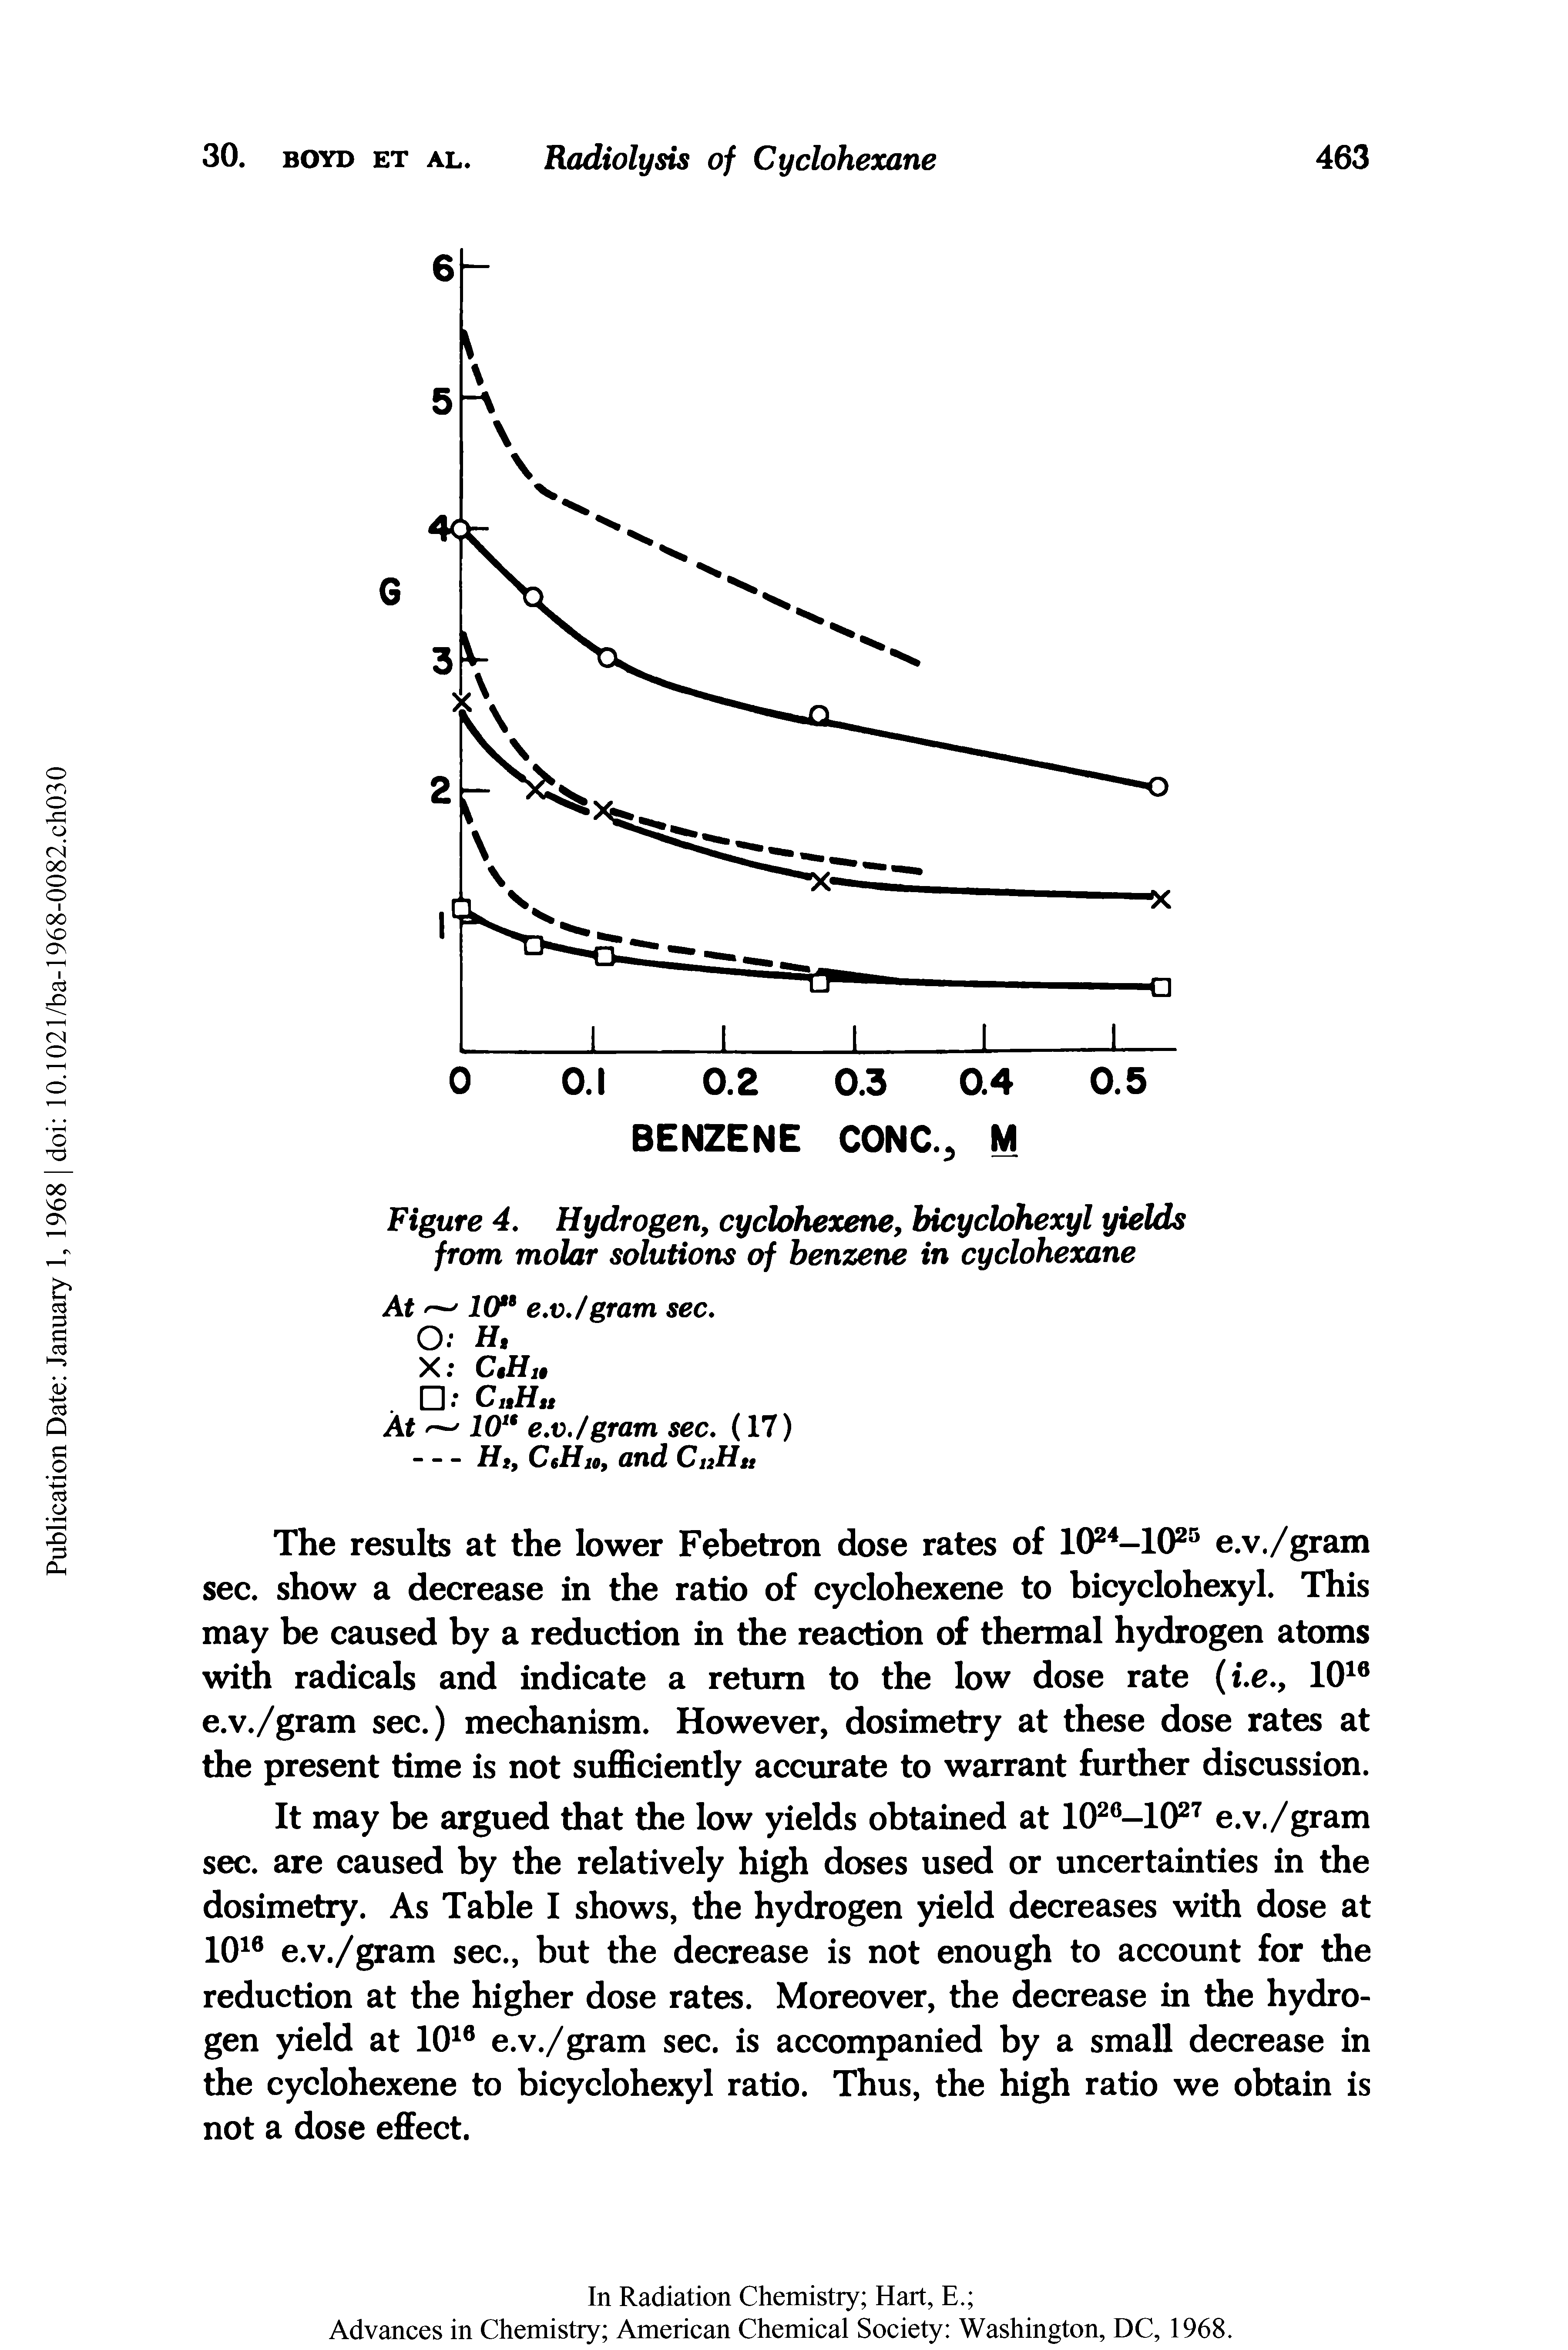 Figure 4. Hydrogen, cyclohexene, bicyclohexyl yields from molar solutions of benzene in cyclohexane...